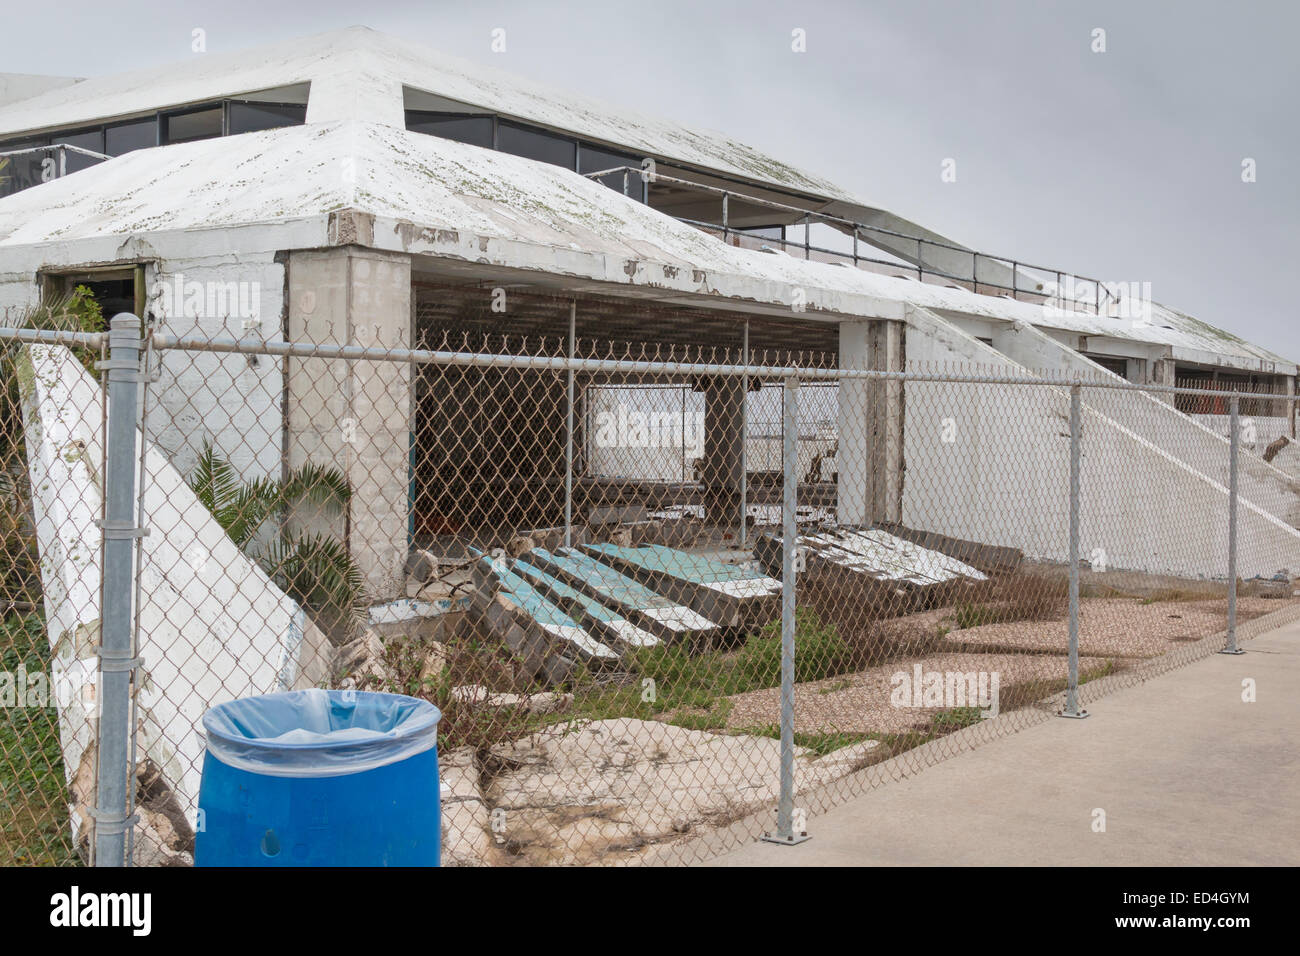 Seawolf Park facilities on Pelican Island, Galveston Texas, damaged by Hurricane Ike in 2008. Stock Photo